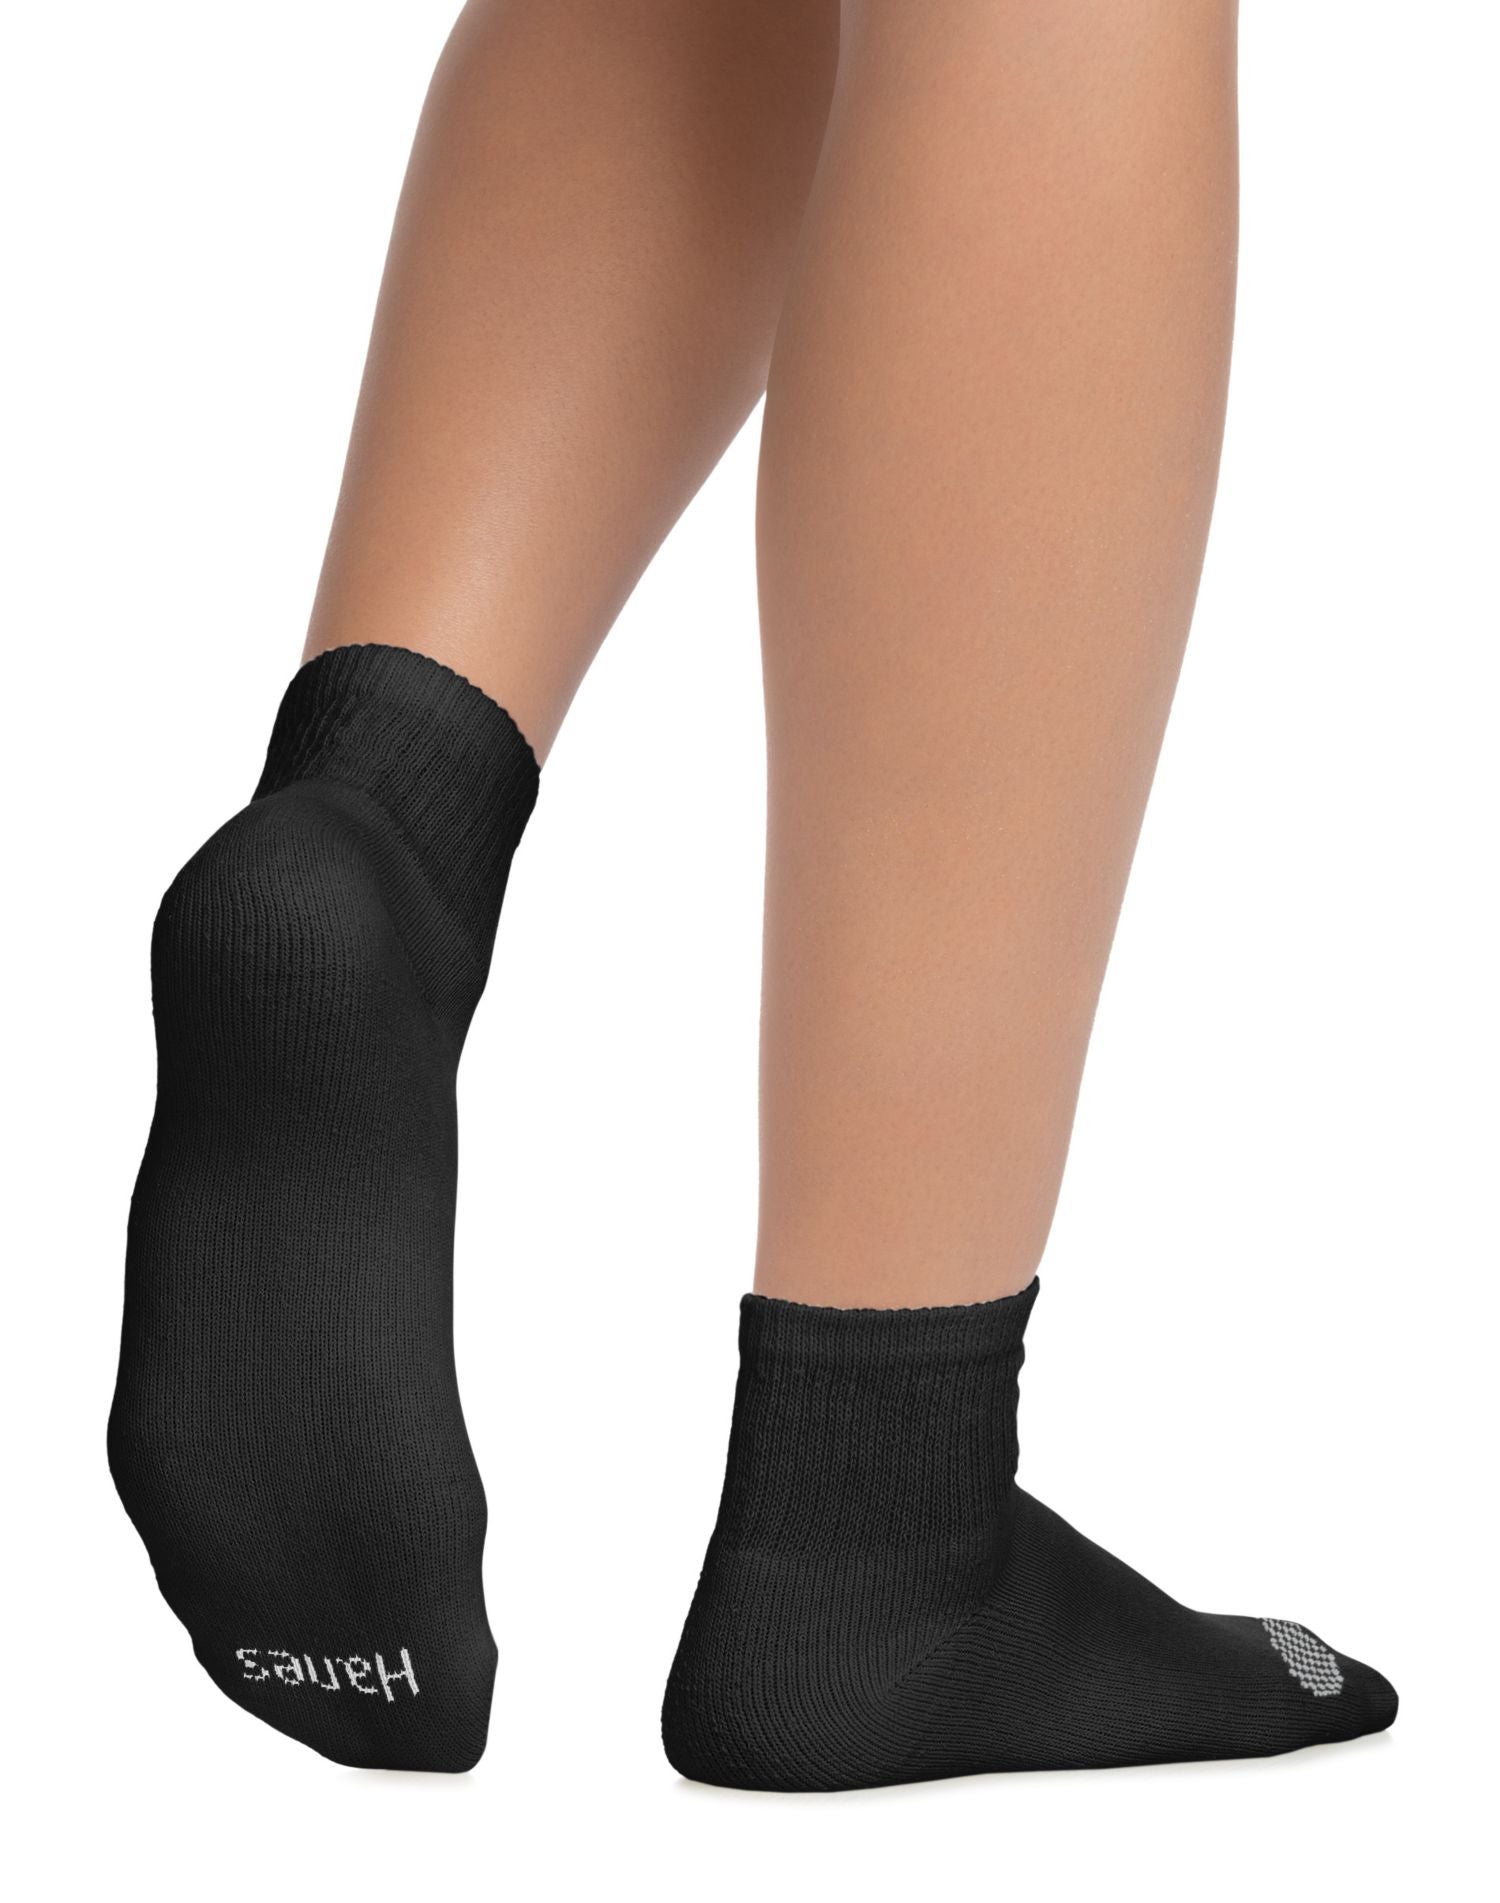 Hanes Comfort Fit Women's Ankle Socks, 6-Pairs Black/Pink 5-9